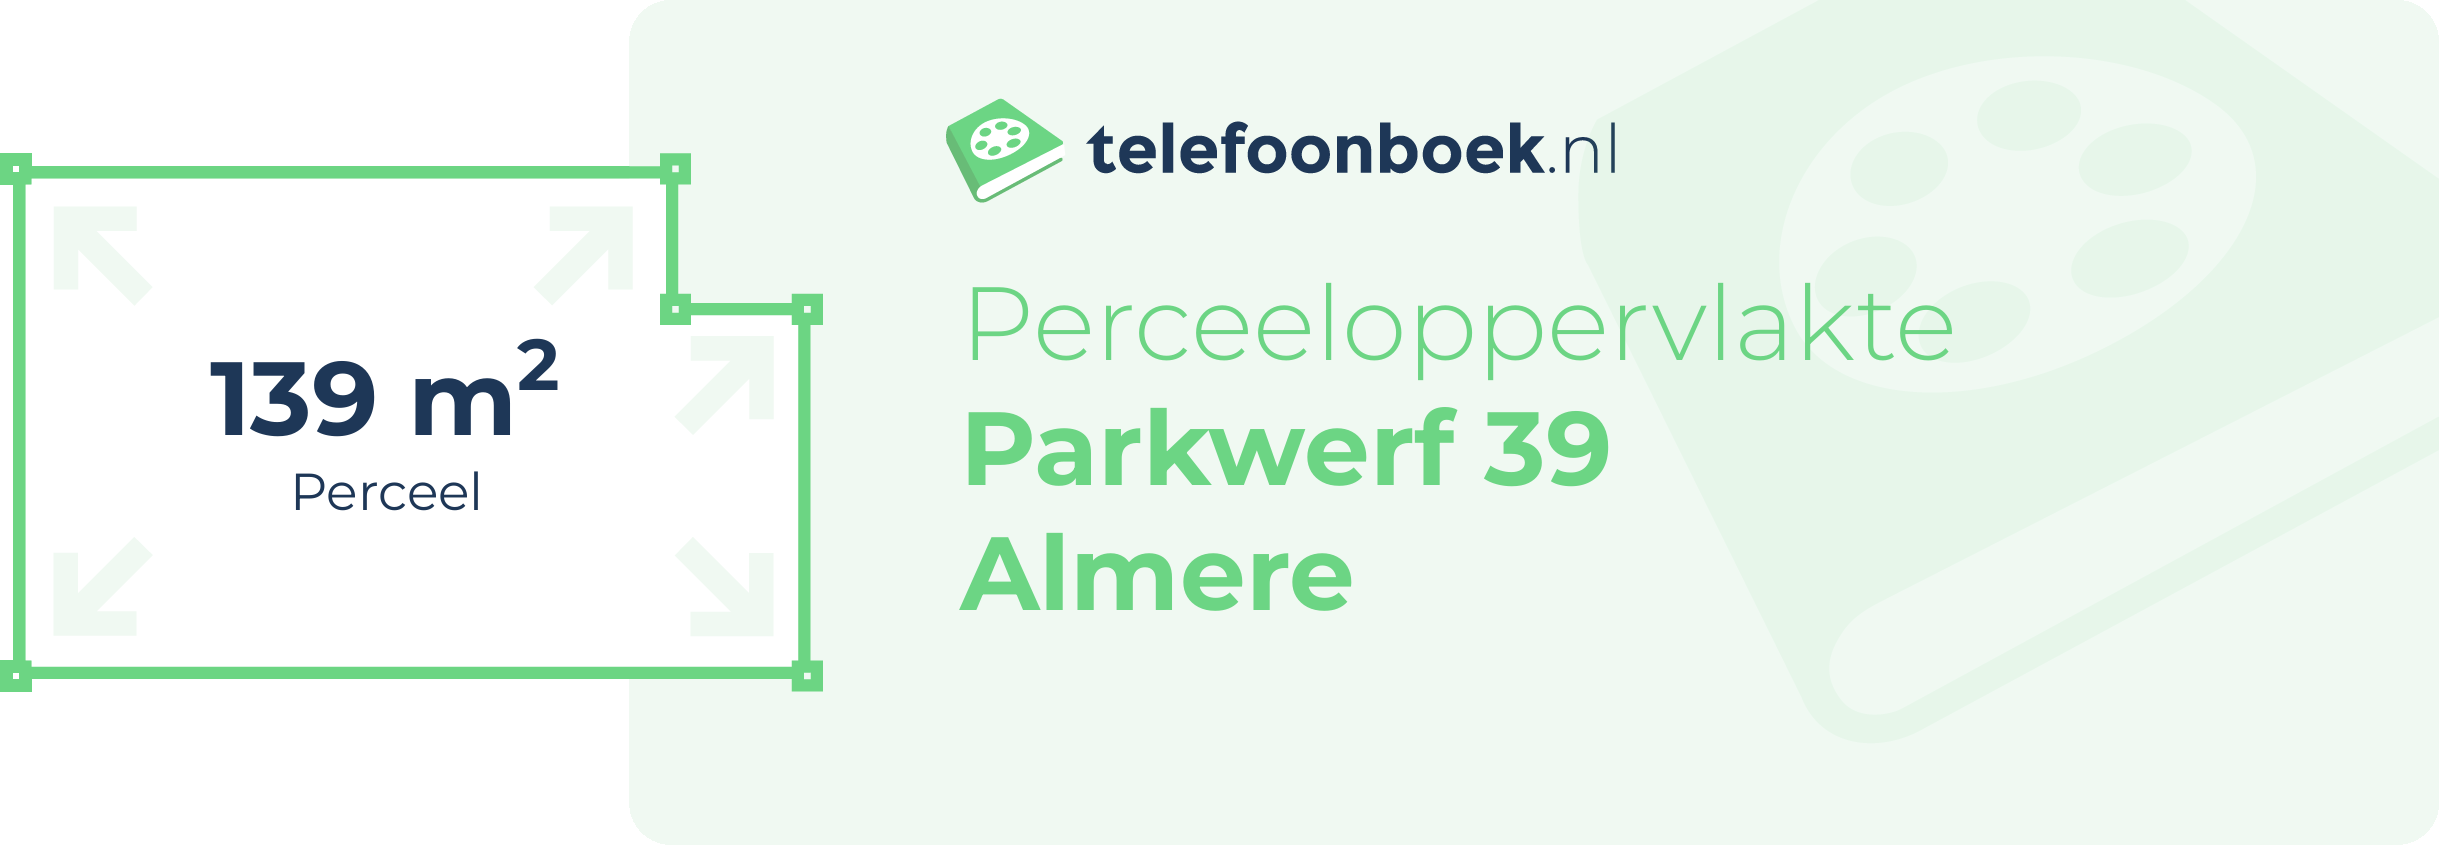 Perceeloppervlakte Parkwerf 39 Almere